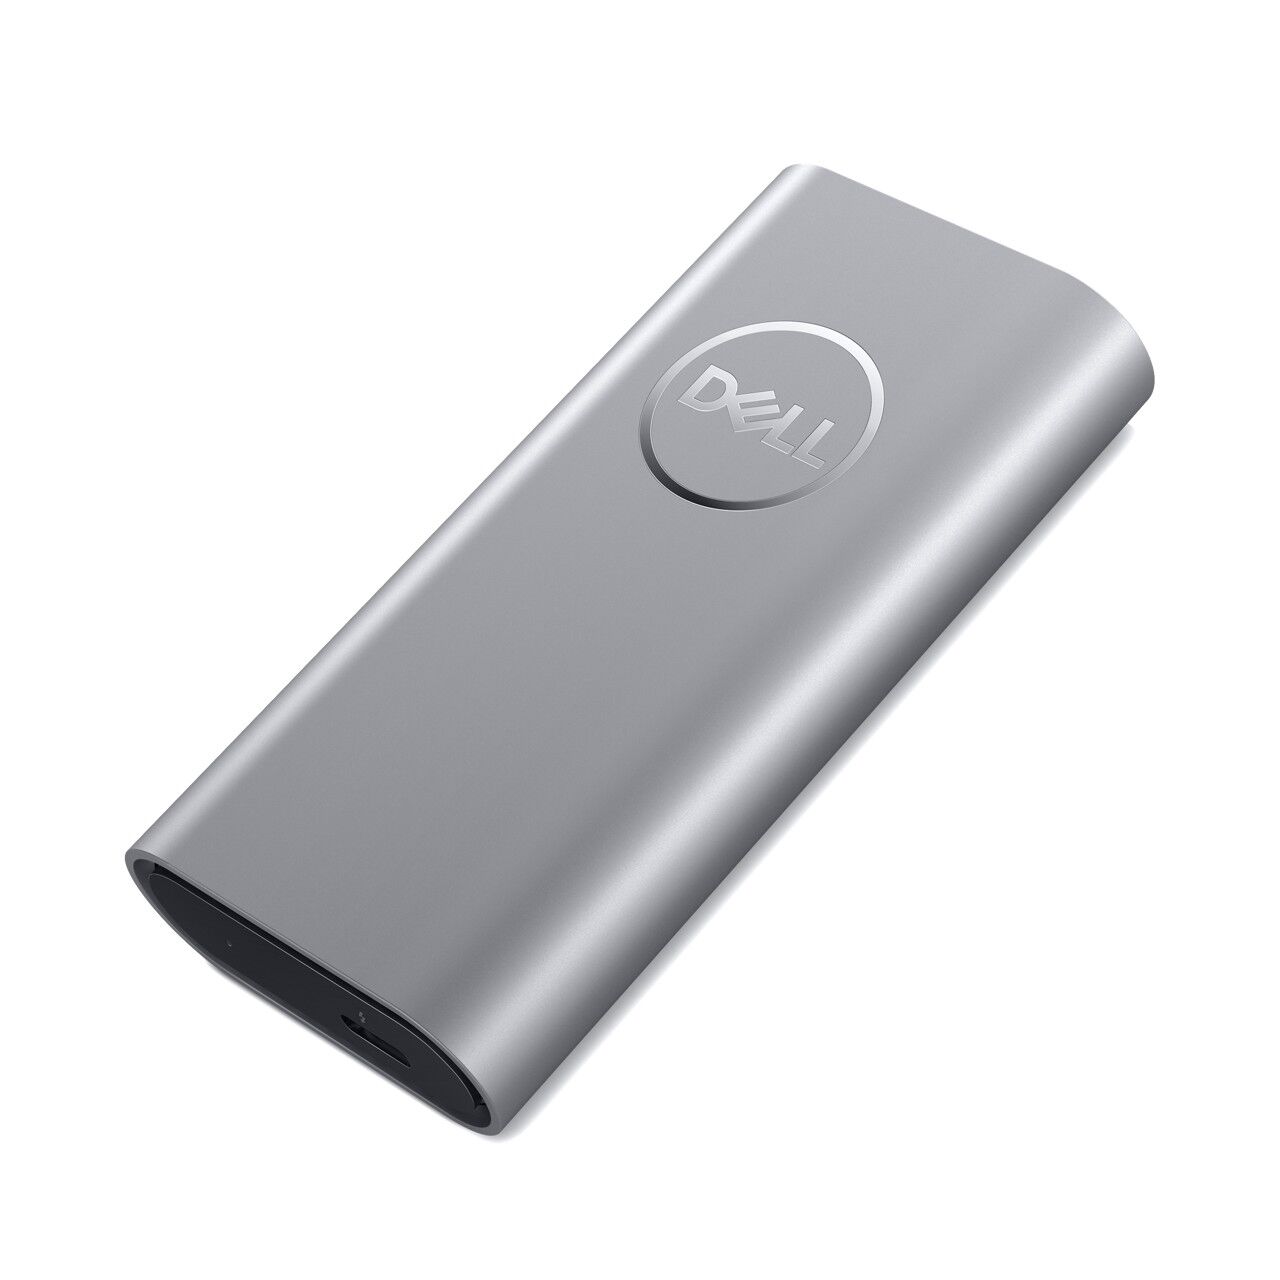 Dell super-sleek TB3-based portable - NotebookCheck.net News